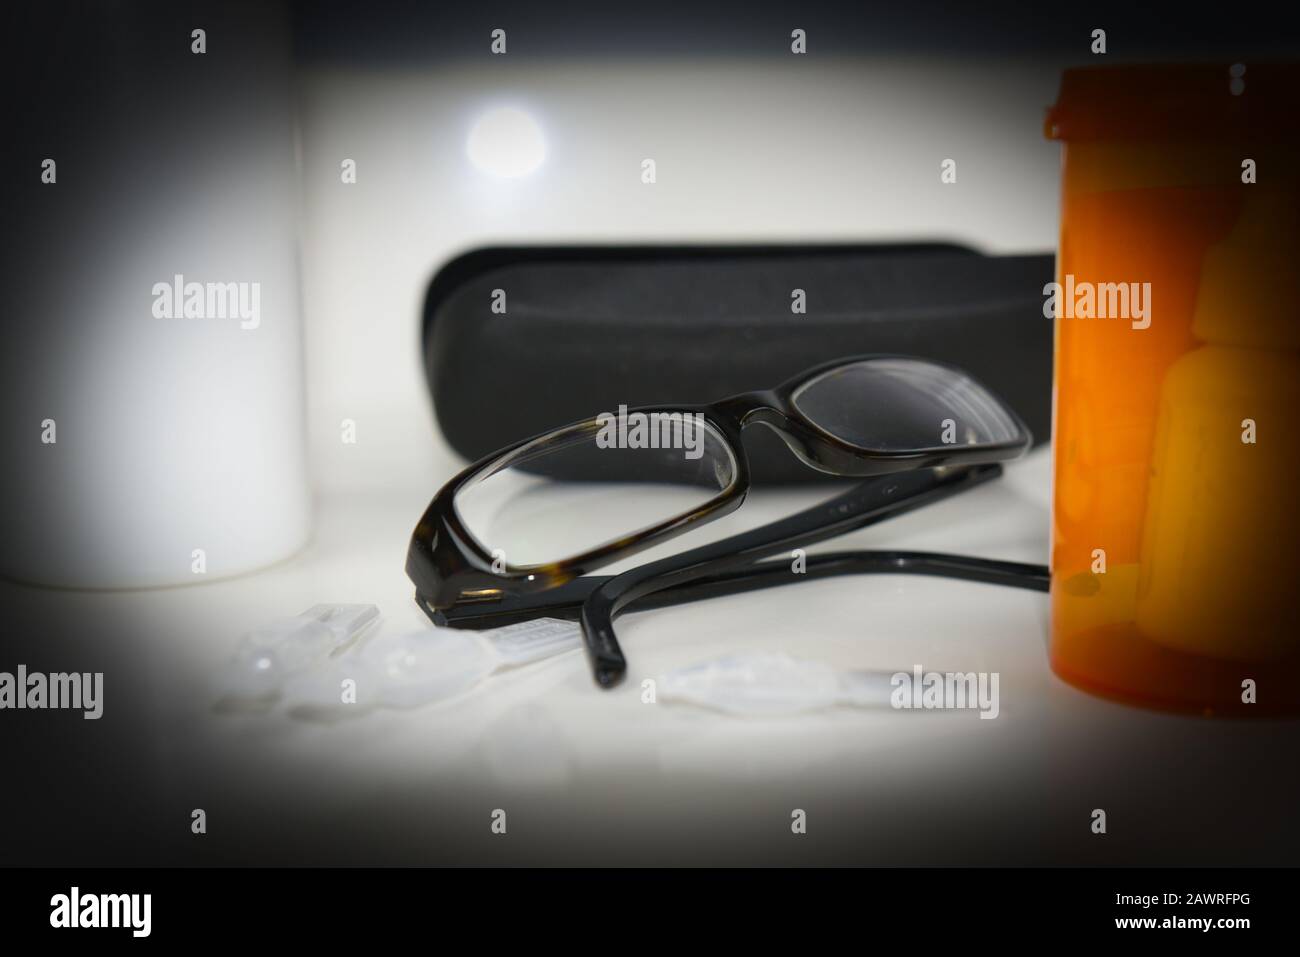 Glaucoma halo around glasses beside prescription vial. Heavy vignette simulating glaucoma vision loss Stock Photo